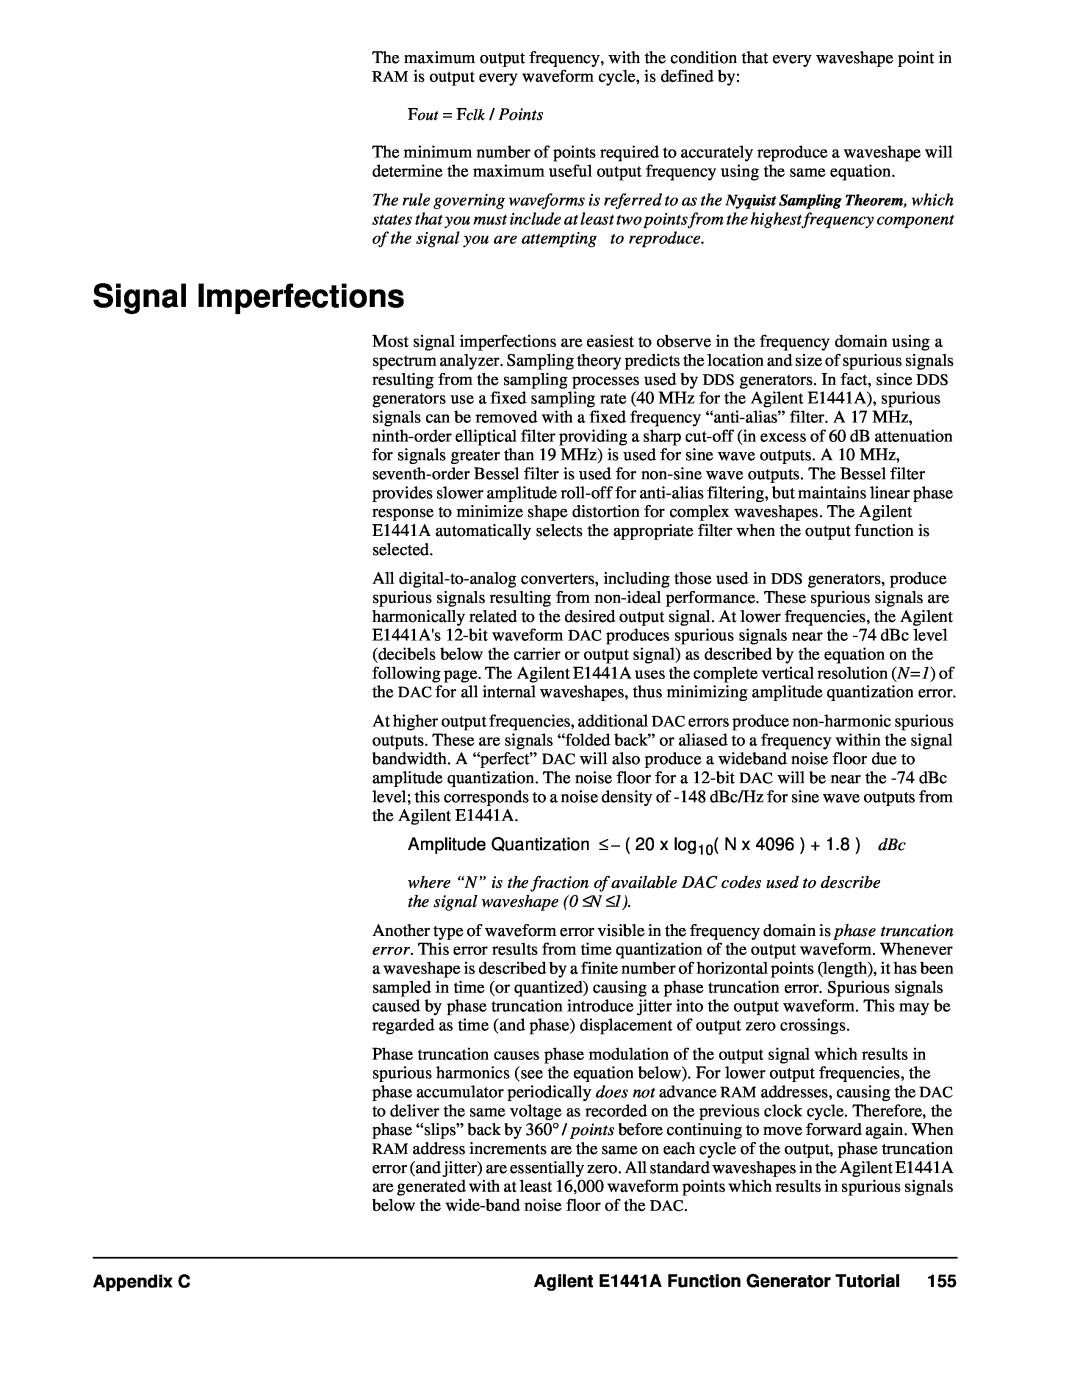 Agilent Technologies user service Signal Imperfections, Appendix C, Agilent E1441A Function Generator Tutorial 